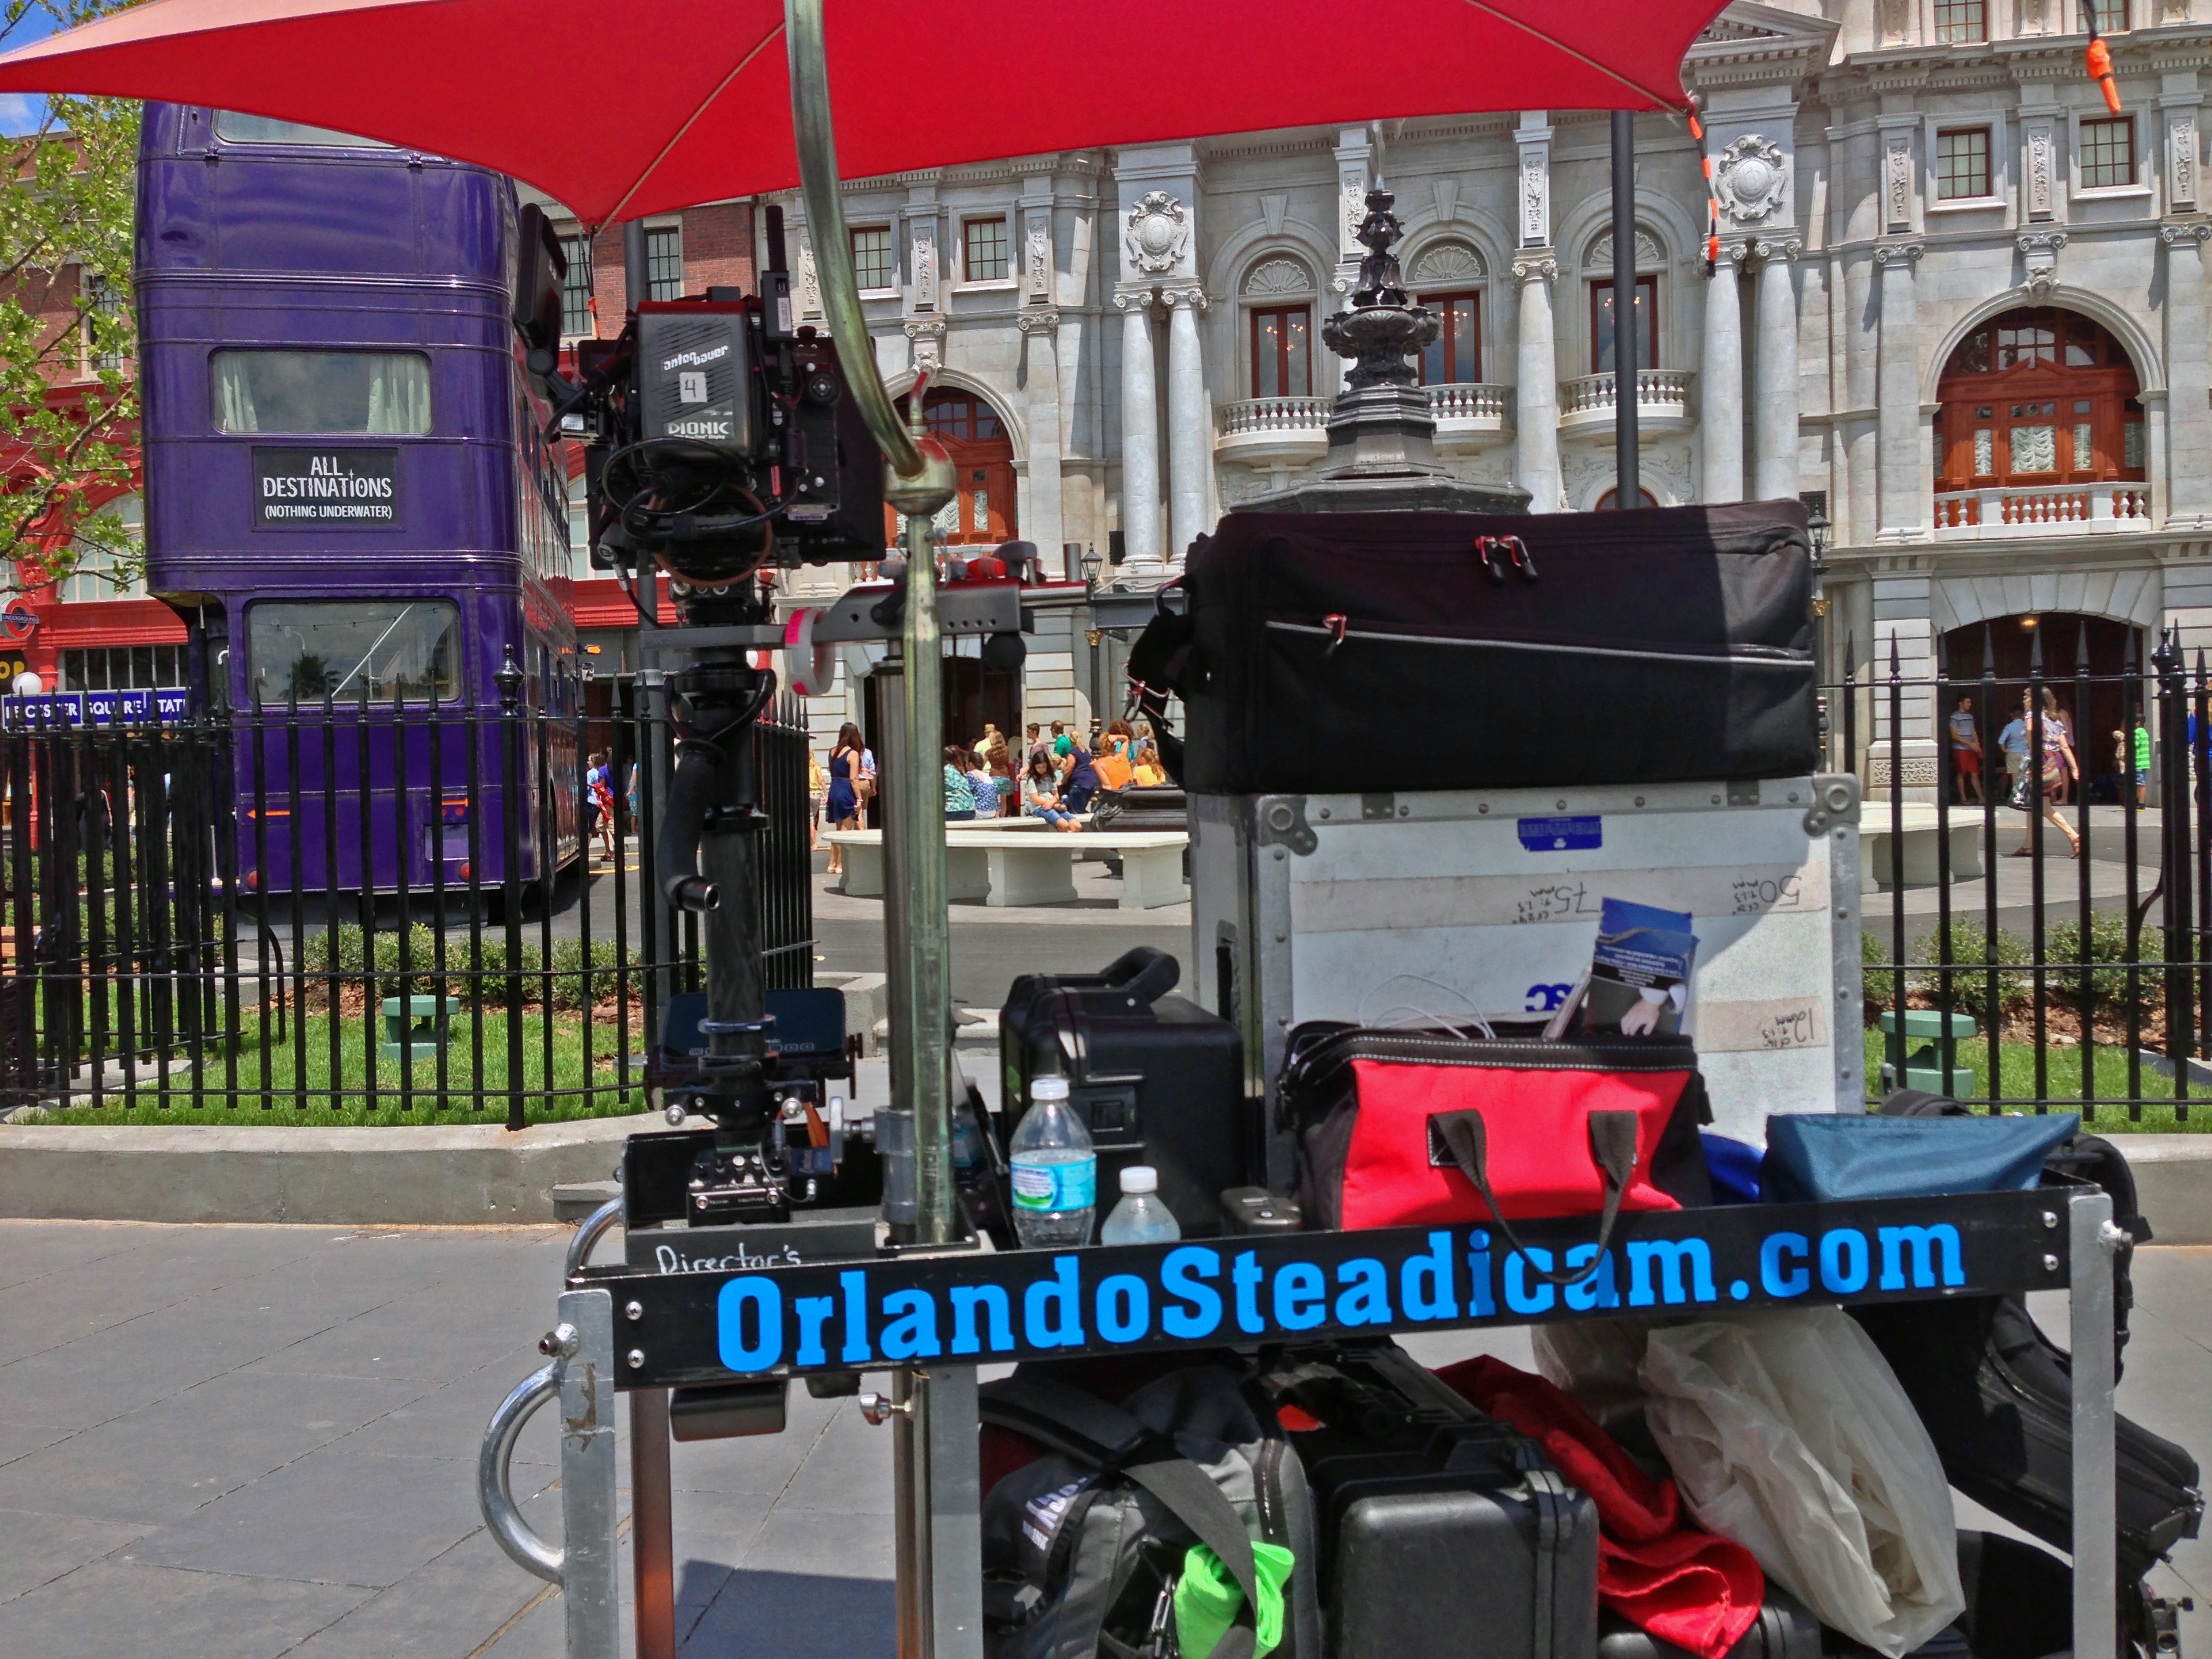 Orlando Steadicam on the London Streetfront at Universal Studios Florida